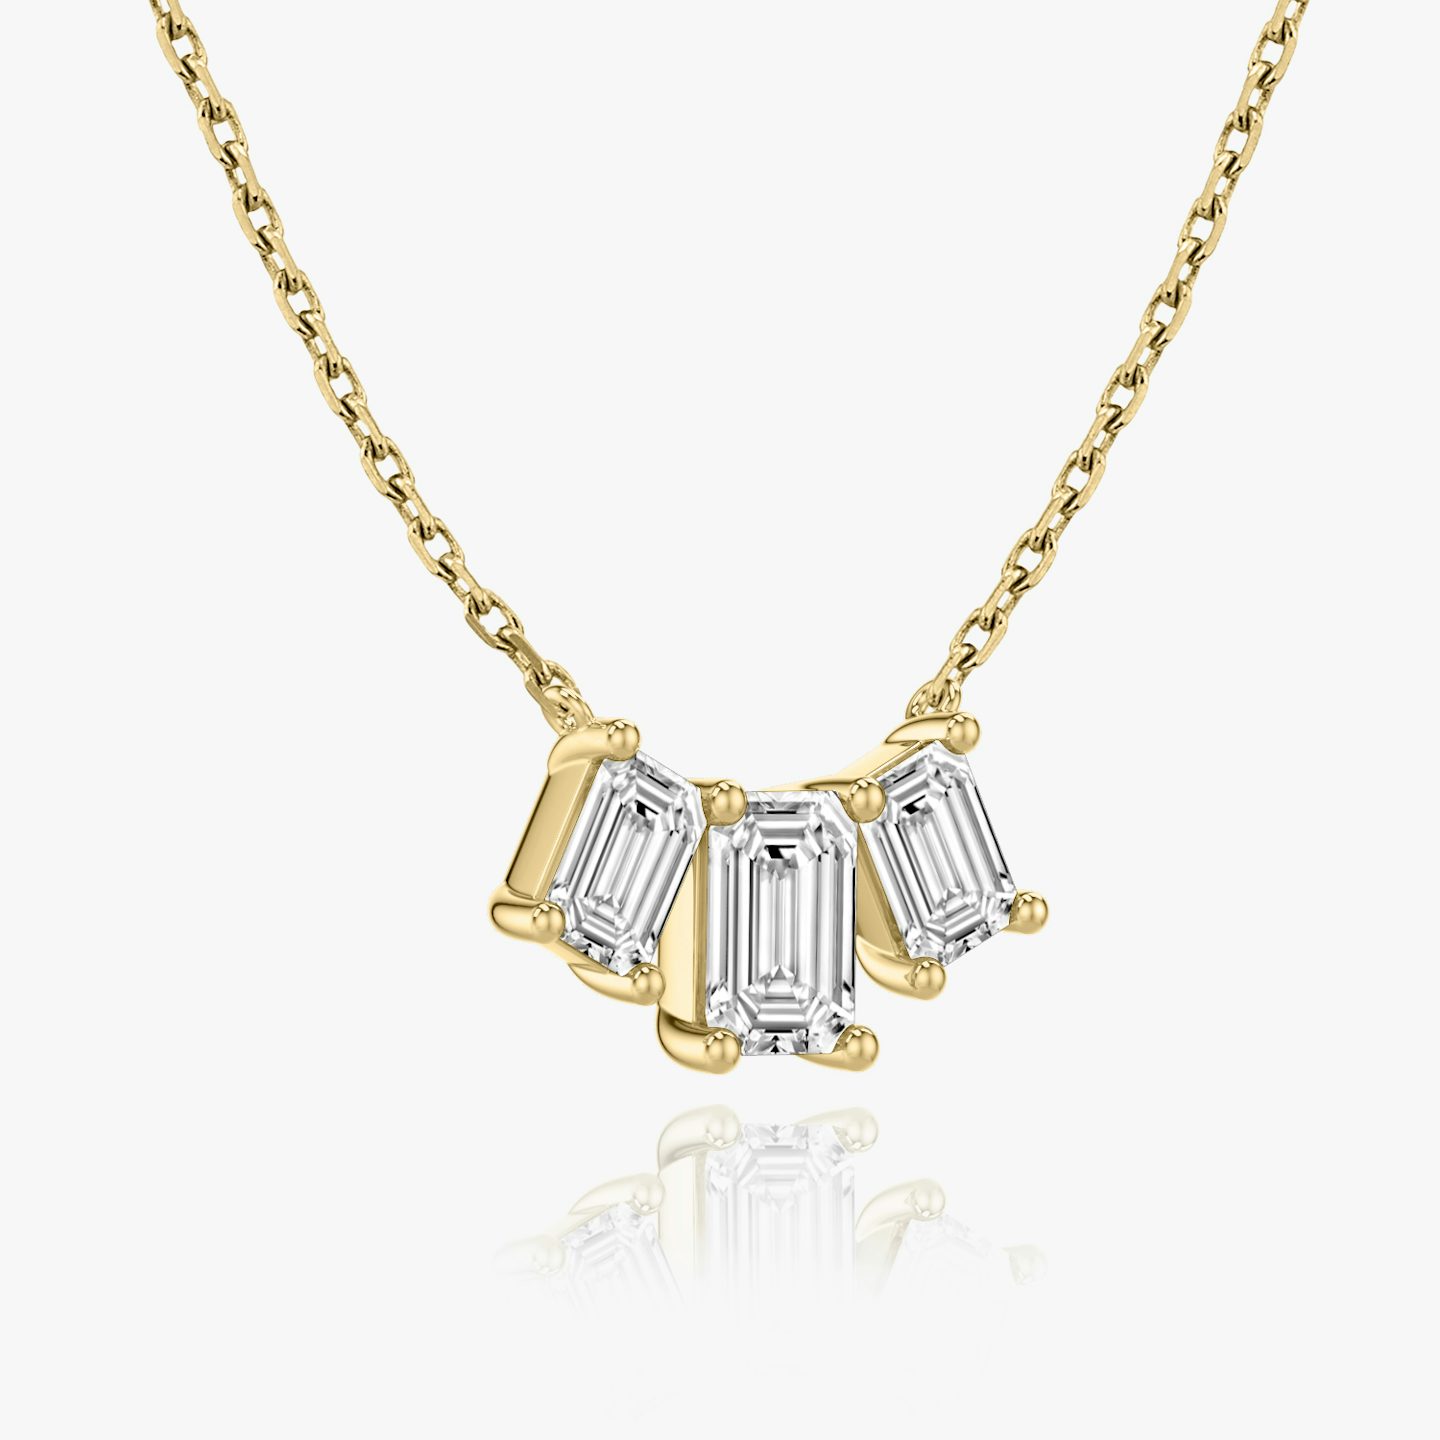 undefined | Emerald | 14k | Yellow Gold | diamondCount: 3 | diamondSize: large | chainLength: 16-18